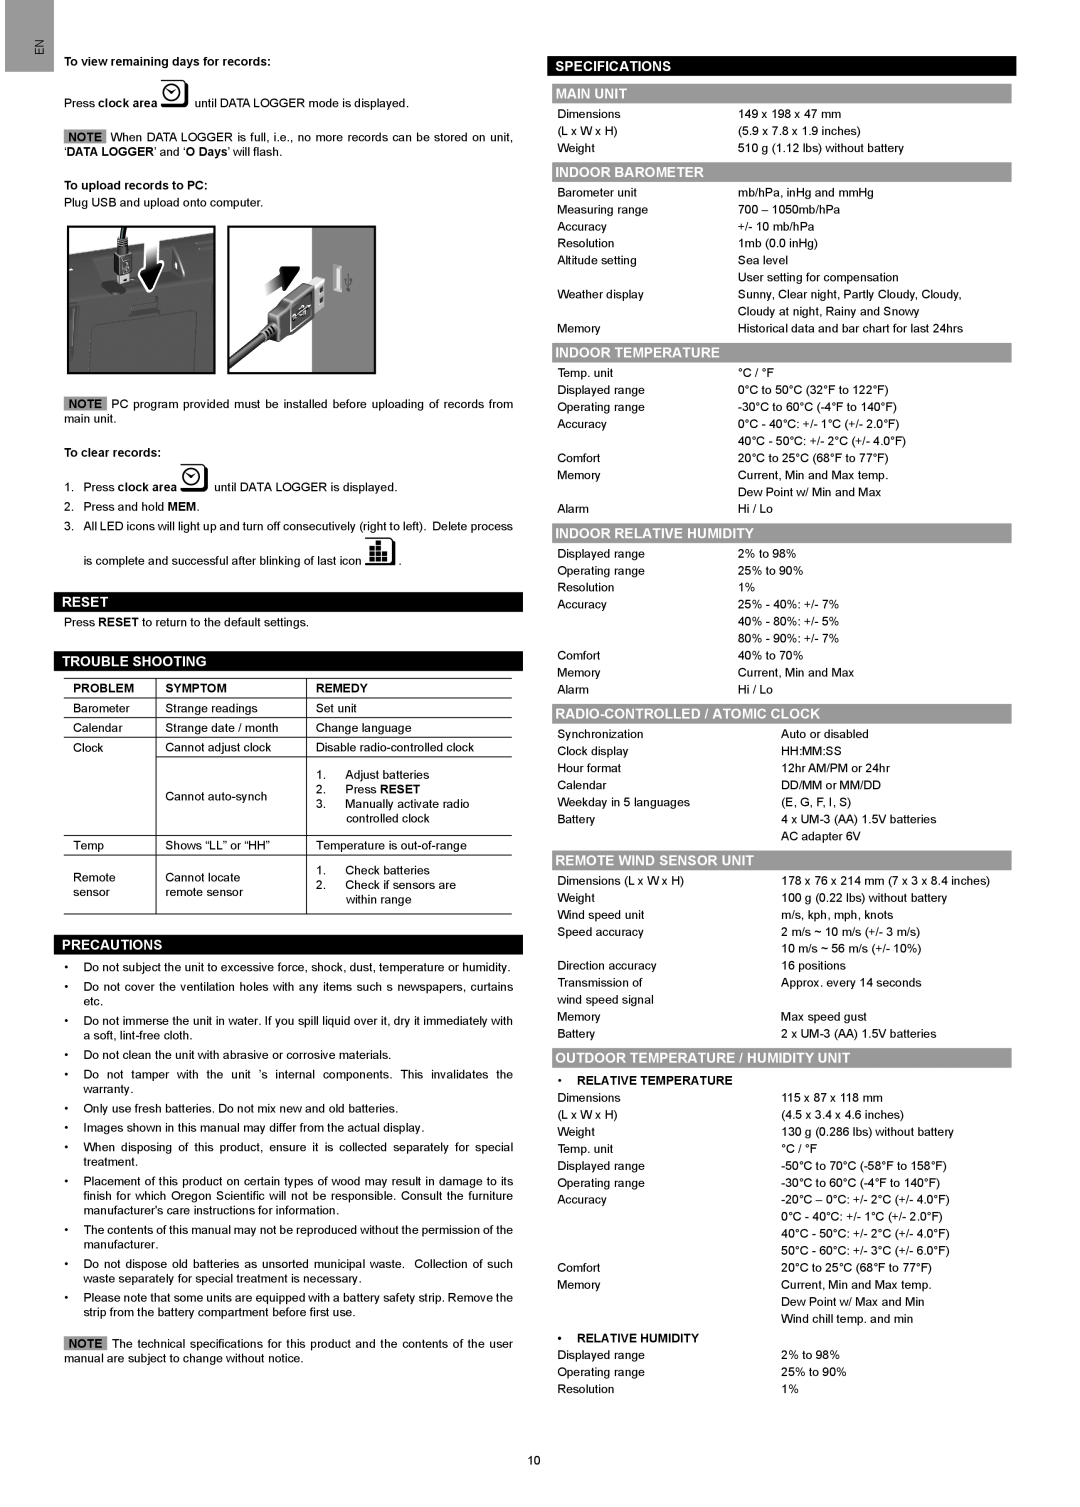 Oregon Scientific WMR200A user manual Reset, Trouble Shooting, Precautions, Specifications Main Unit, Indoor Barometer 